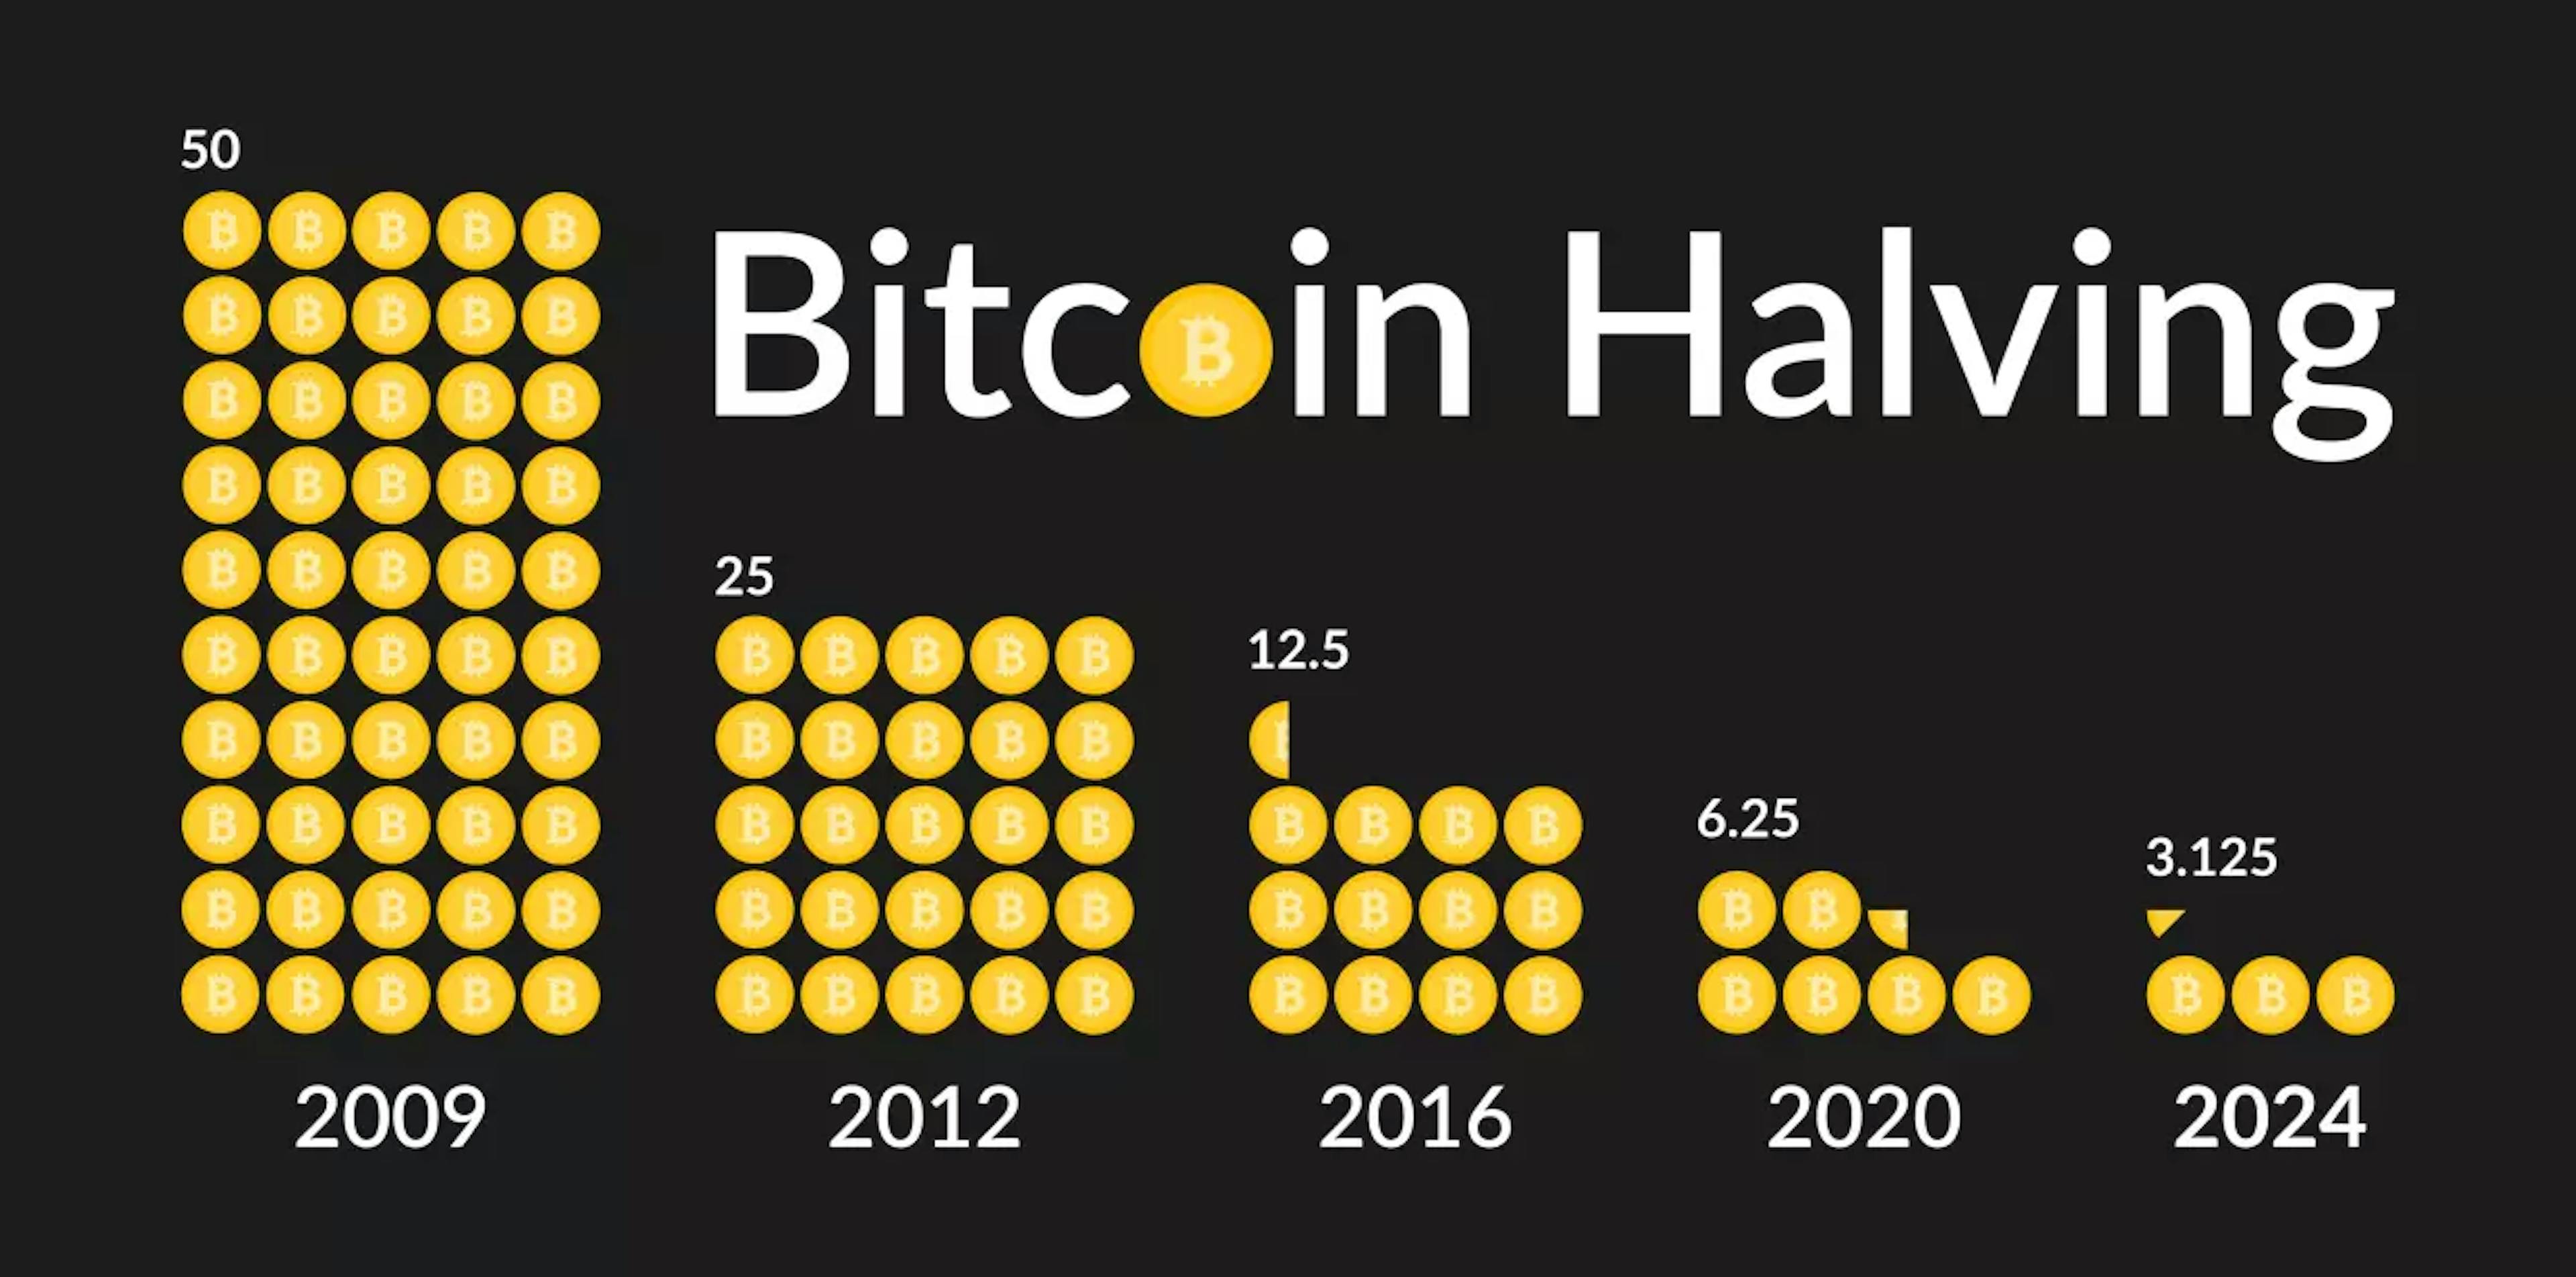 Photo Source: https://www.datawallet.com/crypto/bitcoin-halving-countdown